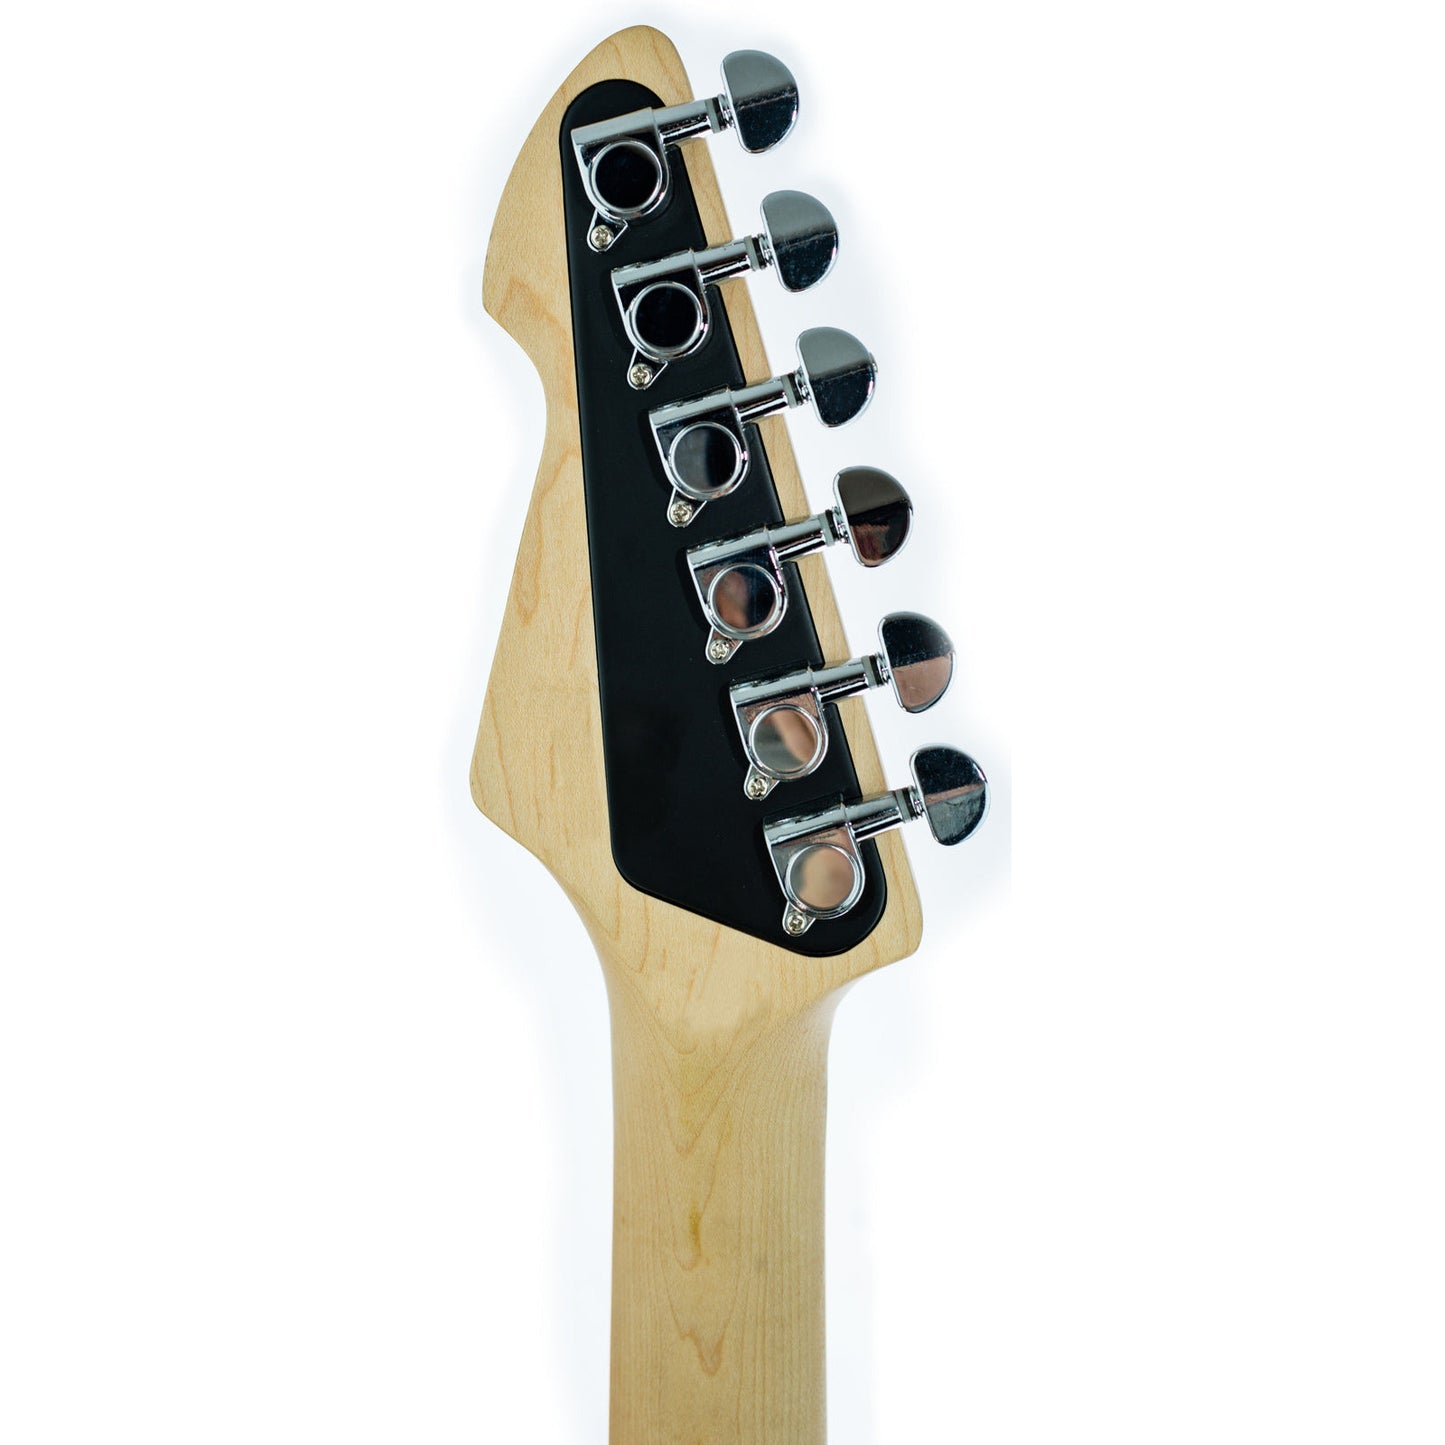 Peavey Raptor Custom Series Electric Guitar in Black 3SC